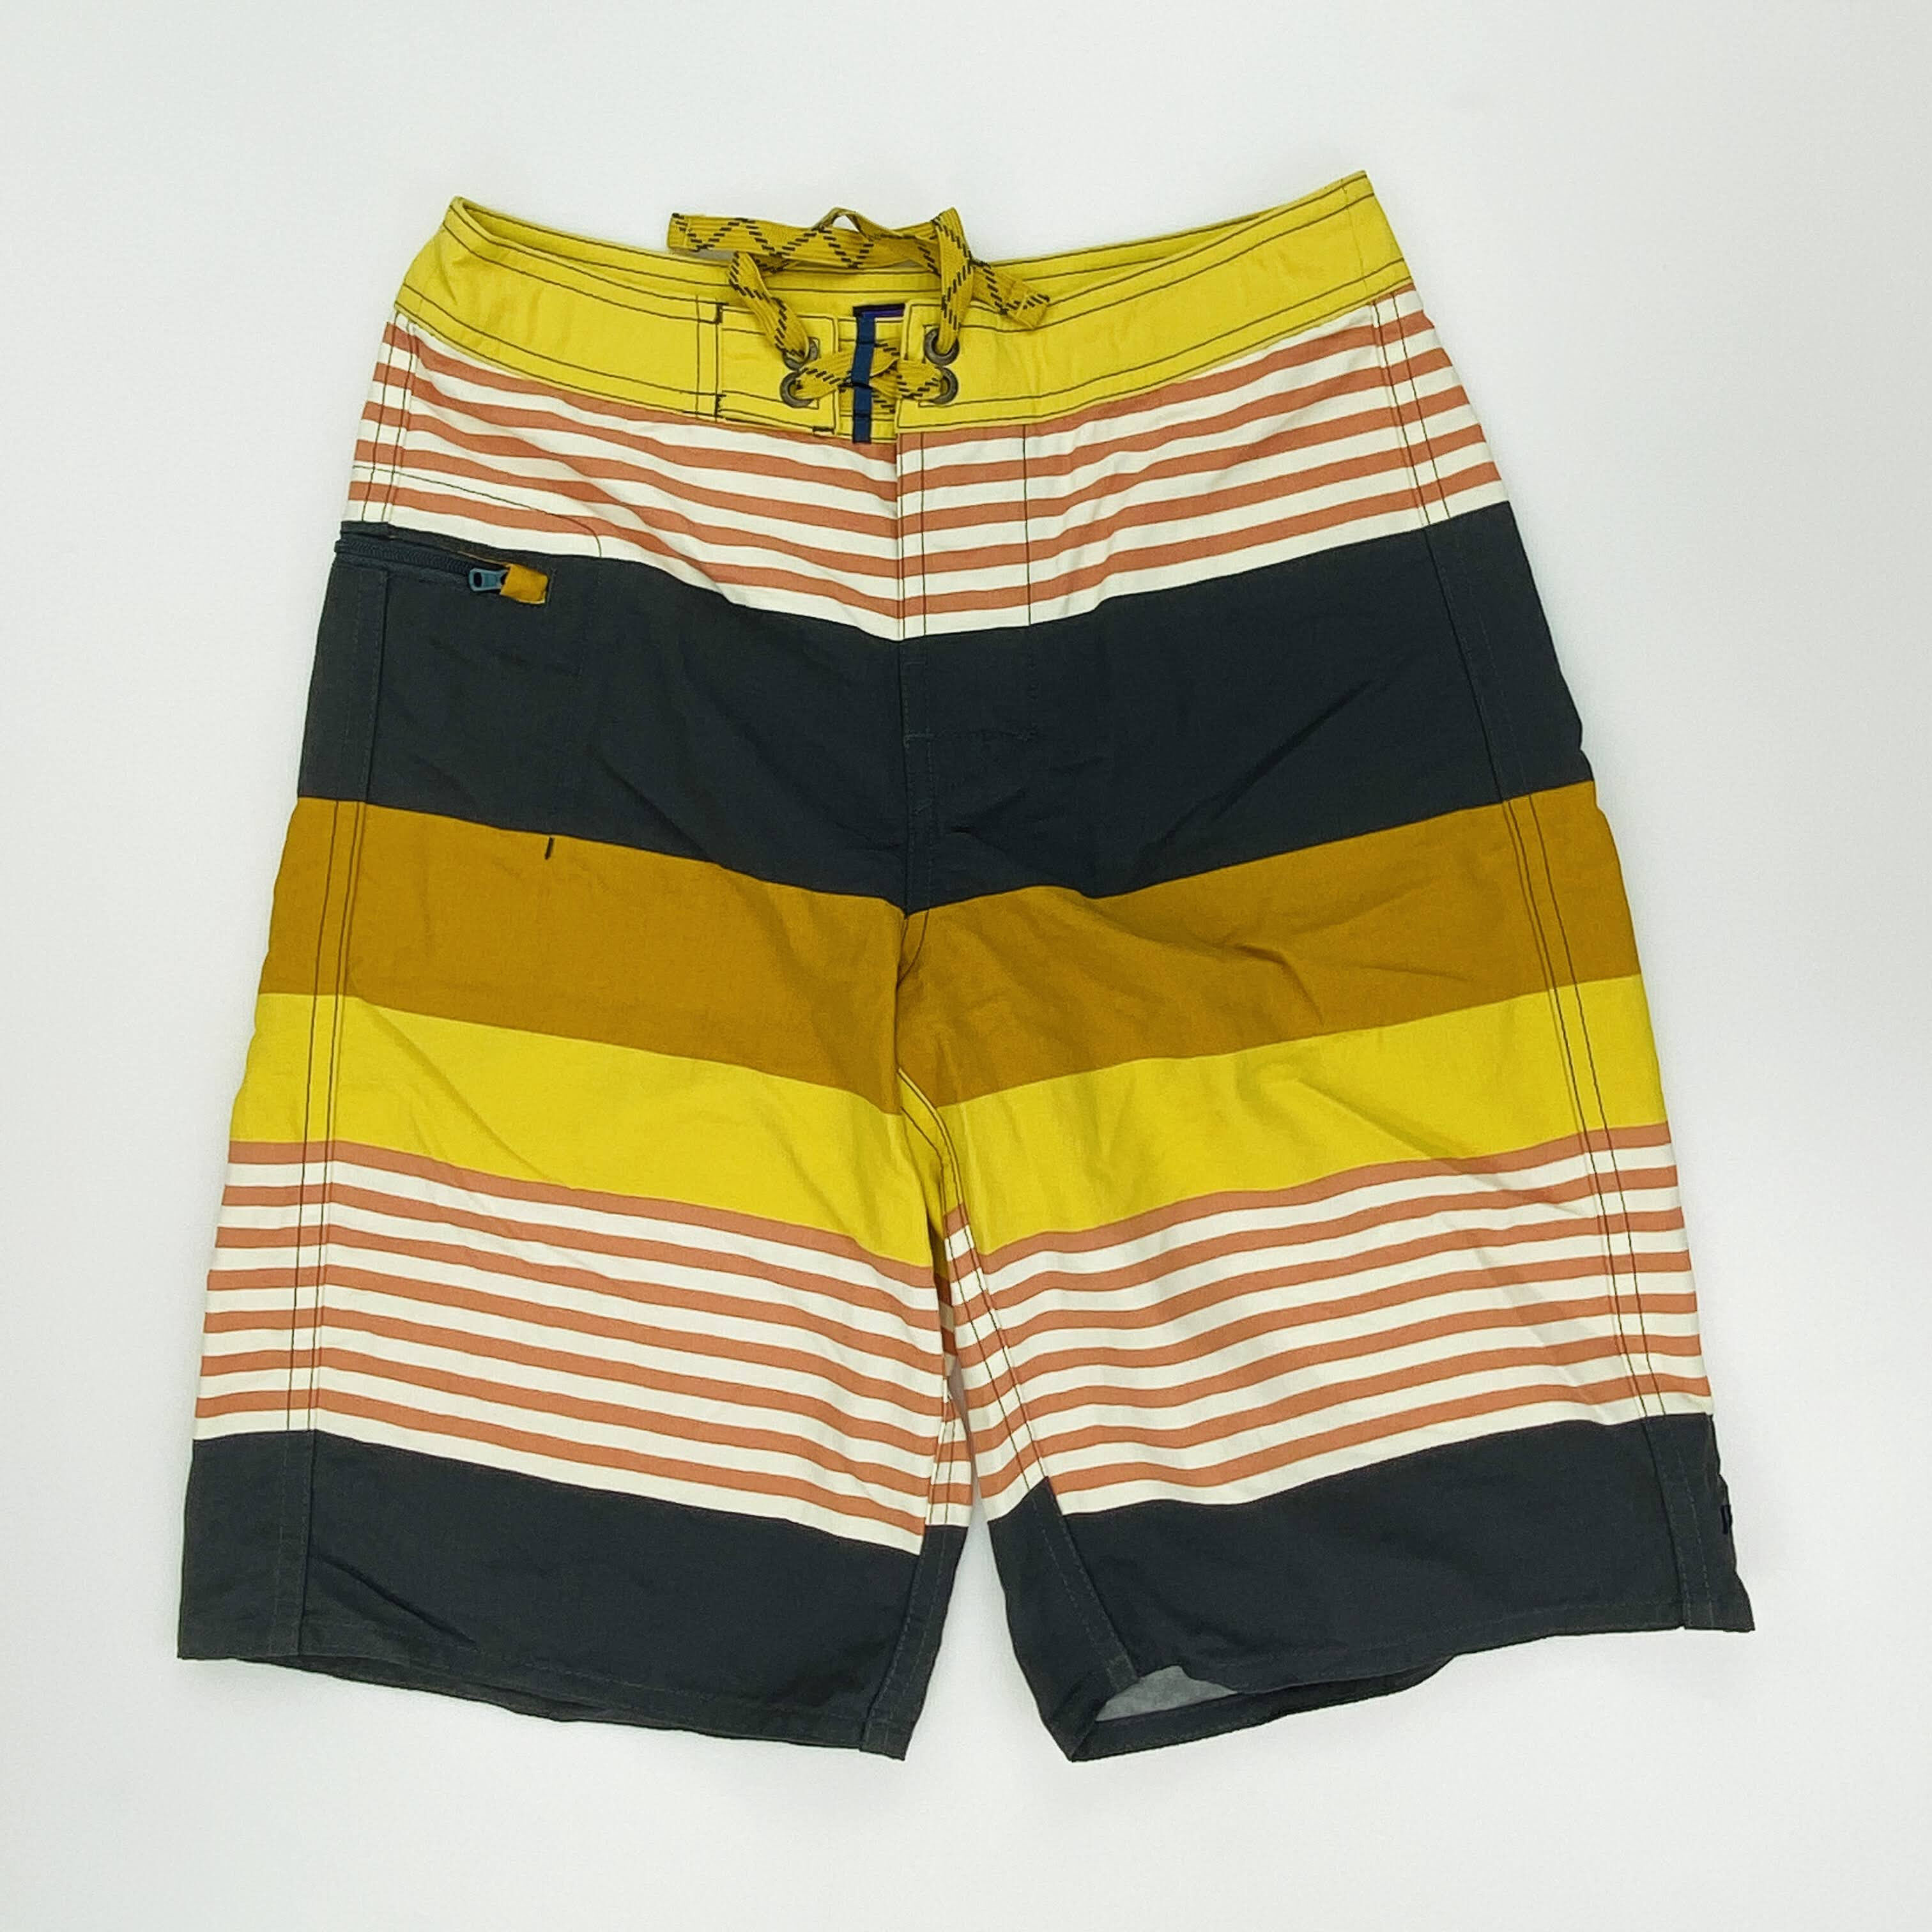 Patagonia Boys' Wavefarer Boardshorts - Second Hand Shorts - Kid's - Multicolored - 10 years old | Hardloop